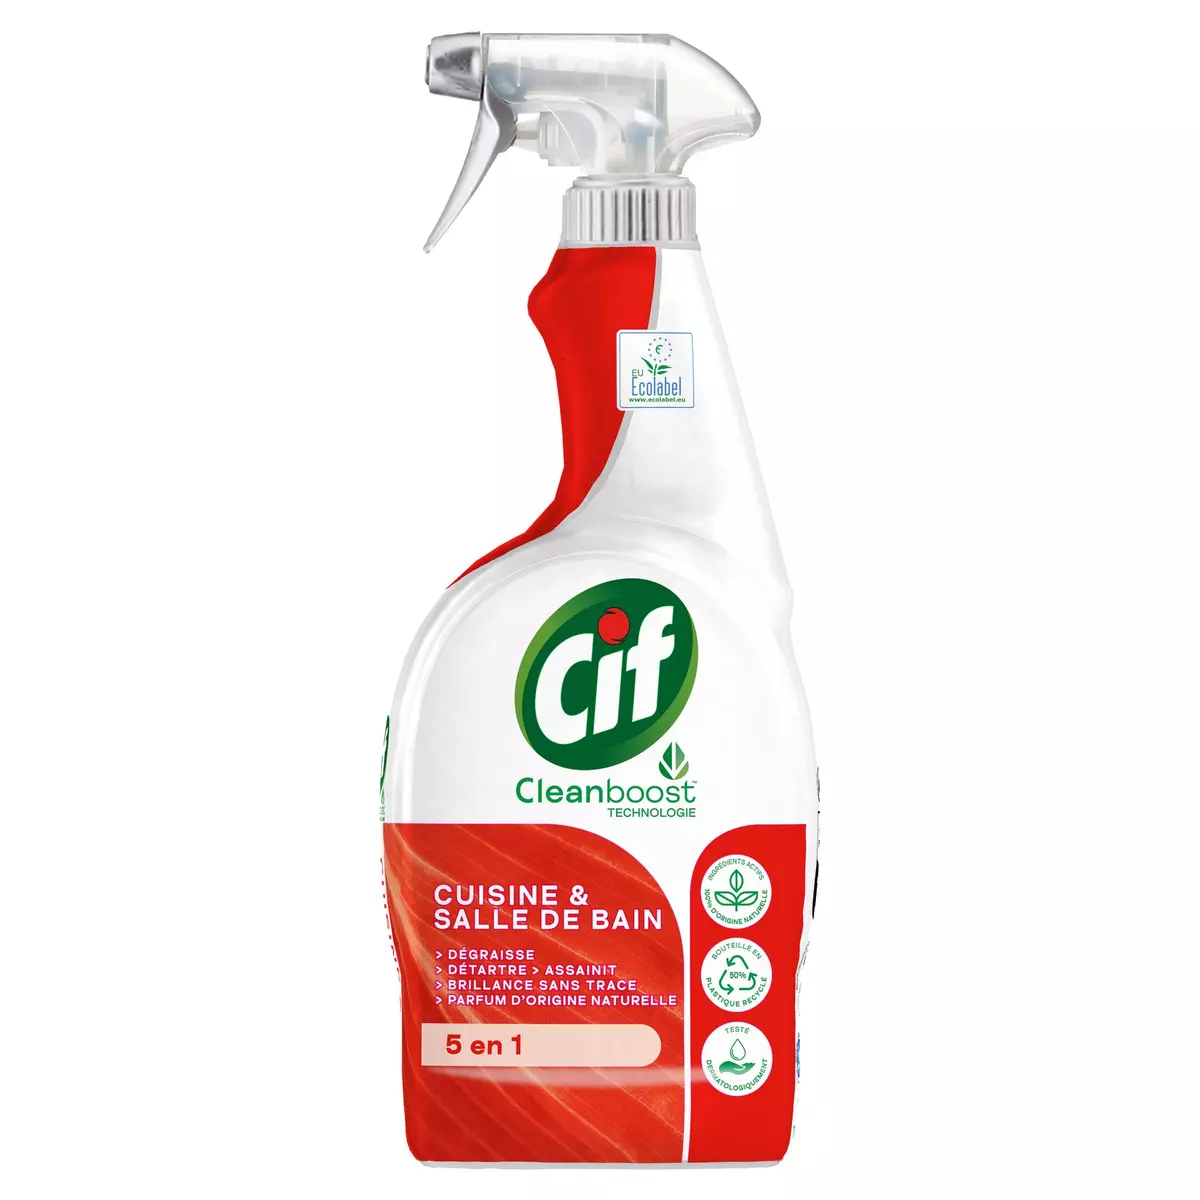 Promo (¹)Spray nettoyant cuisine & salle de bain 5 en 1 CIF 750 ml chez Cora